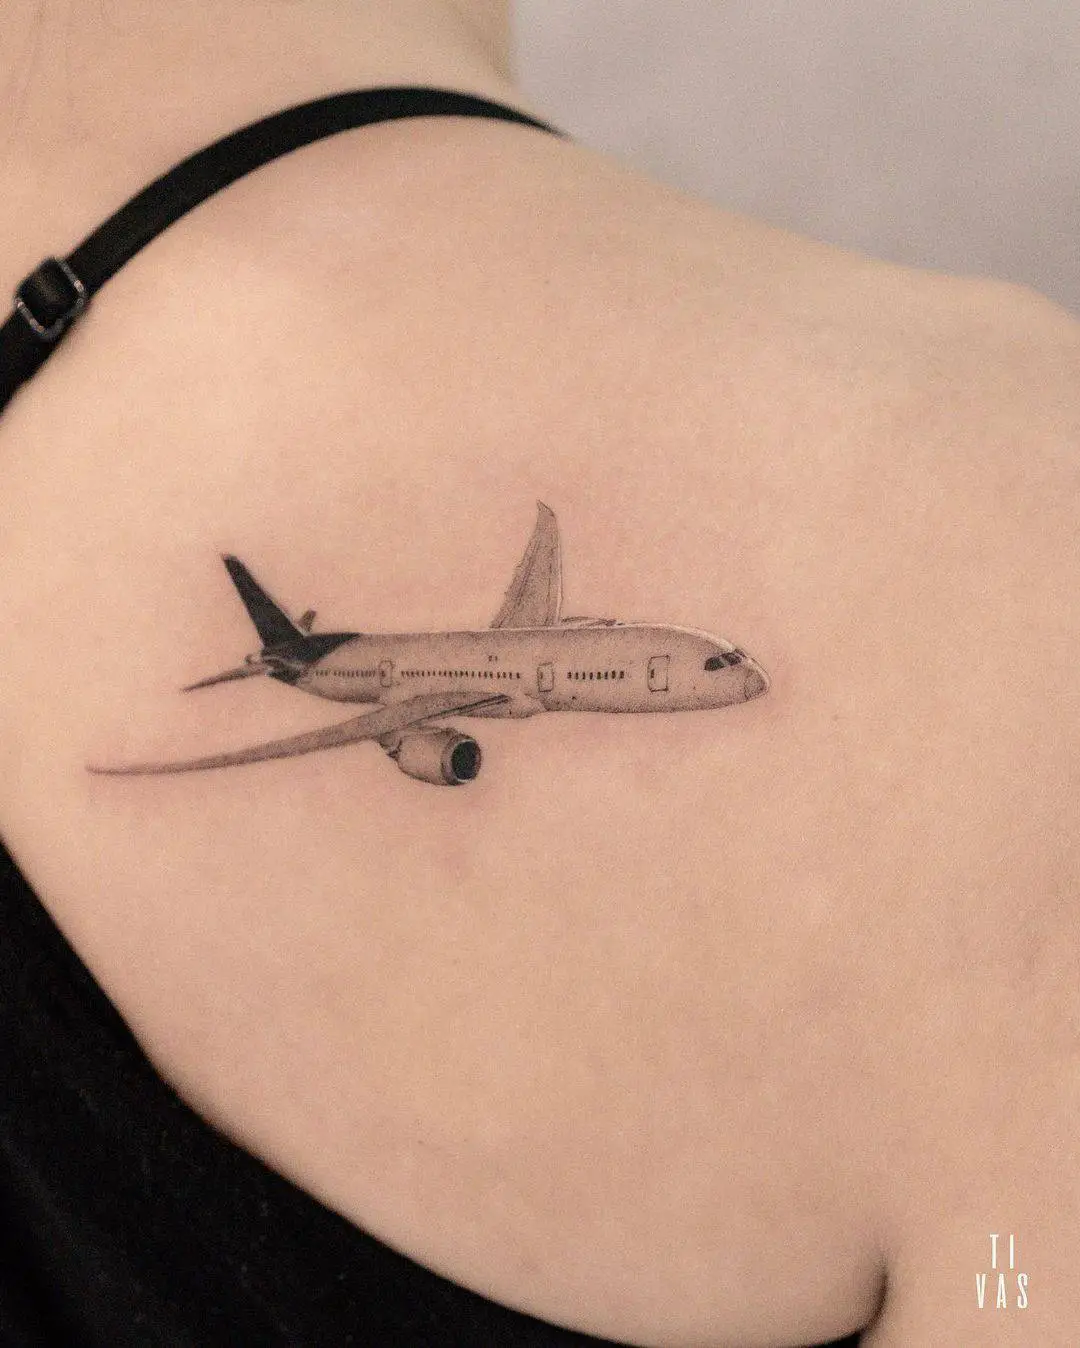 Plane tattoo by tivas